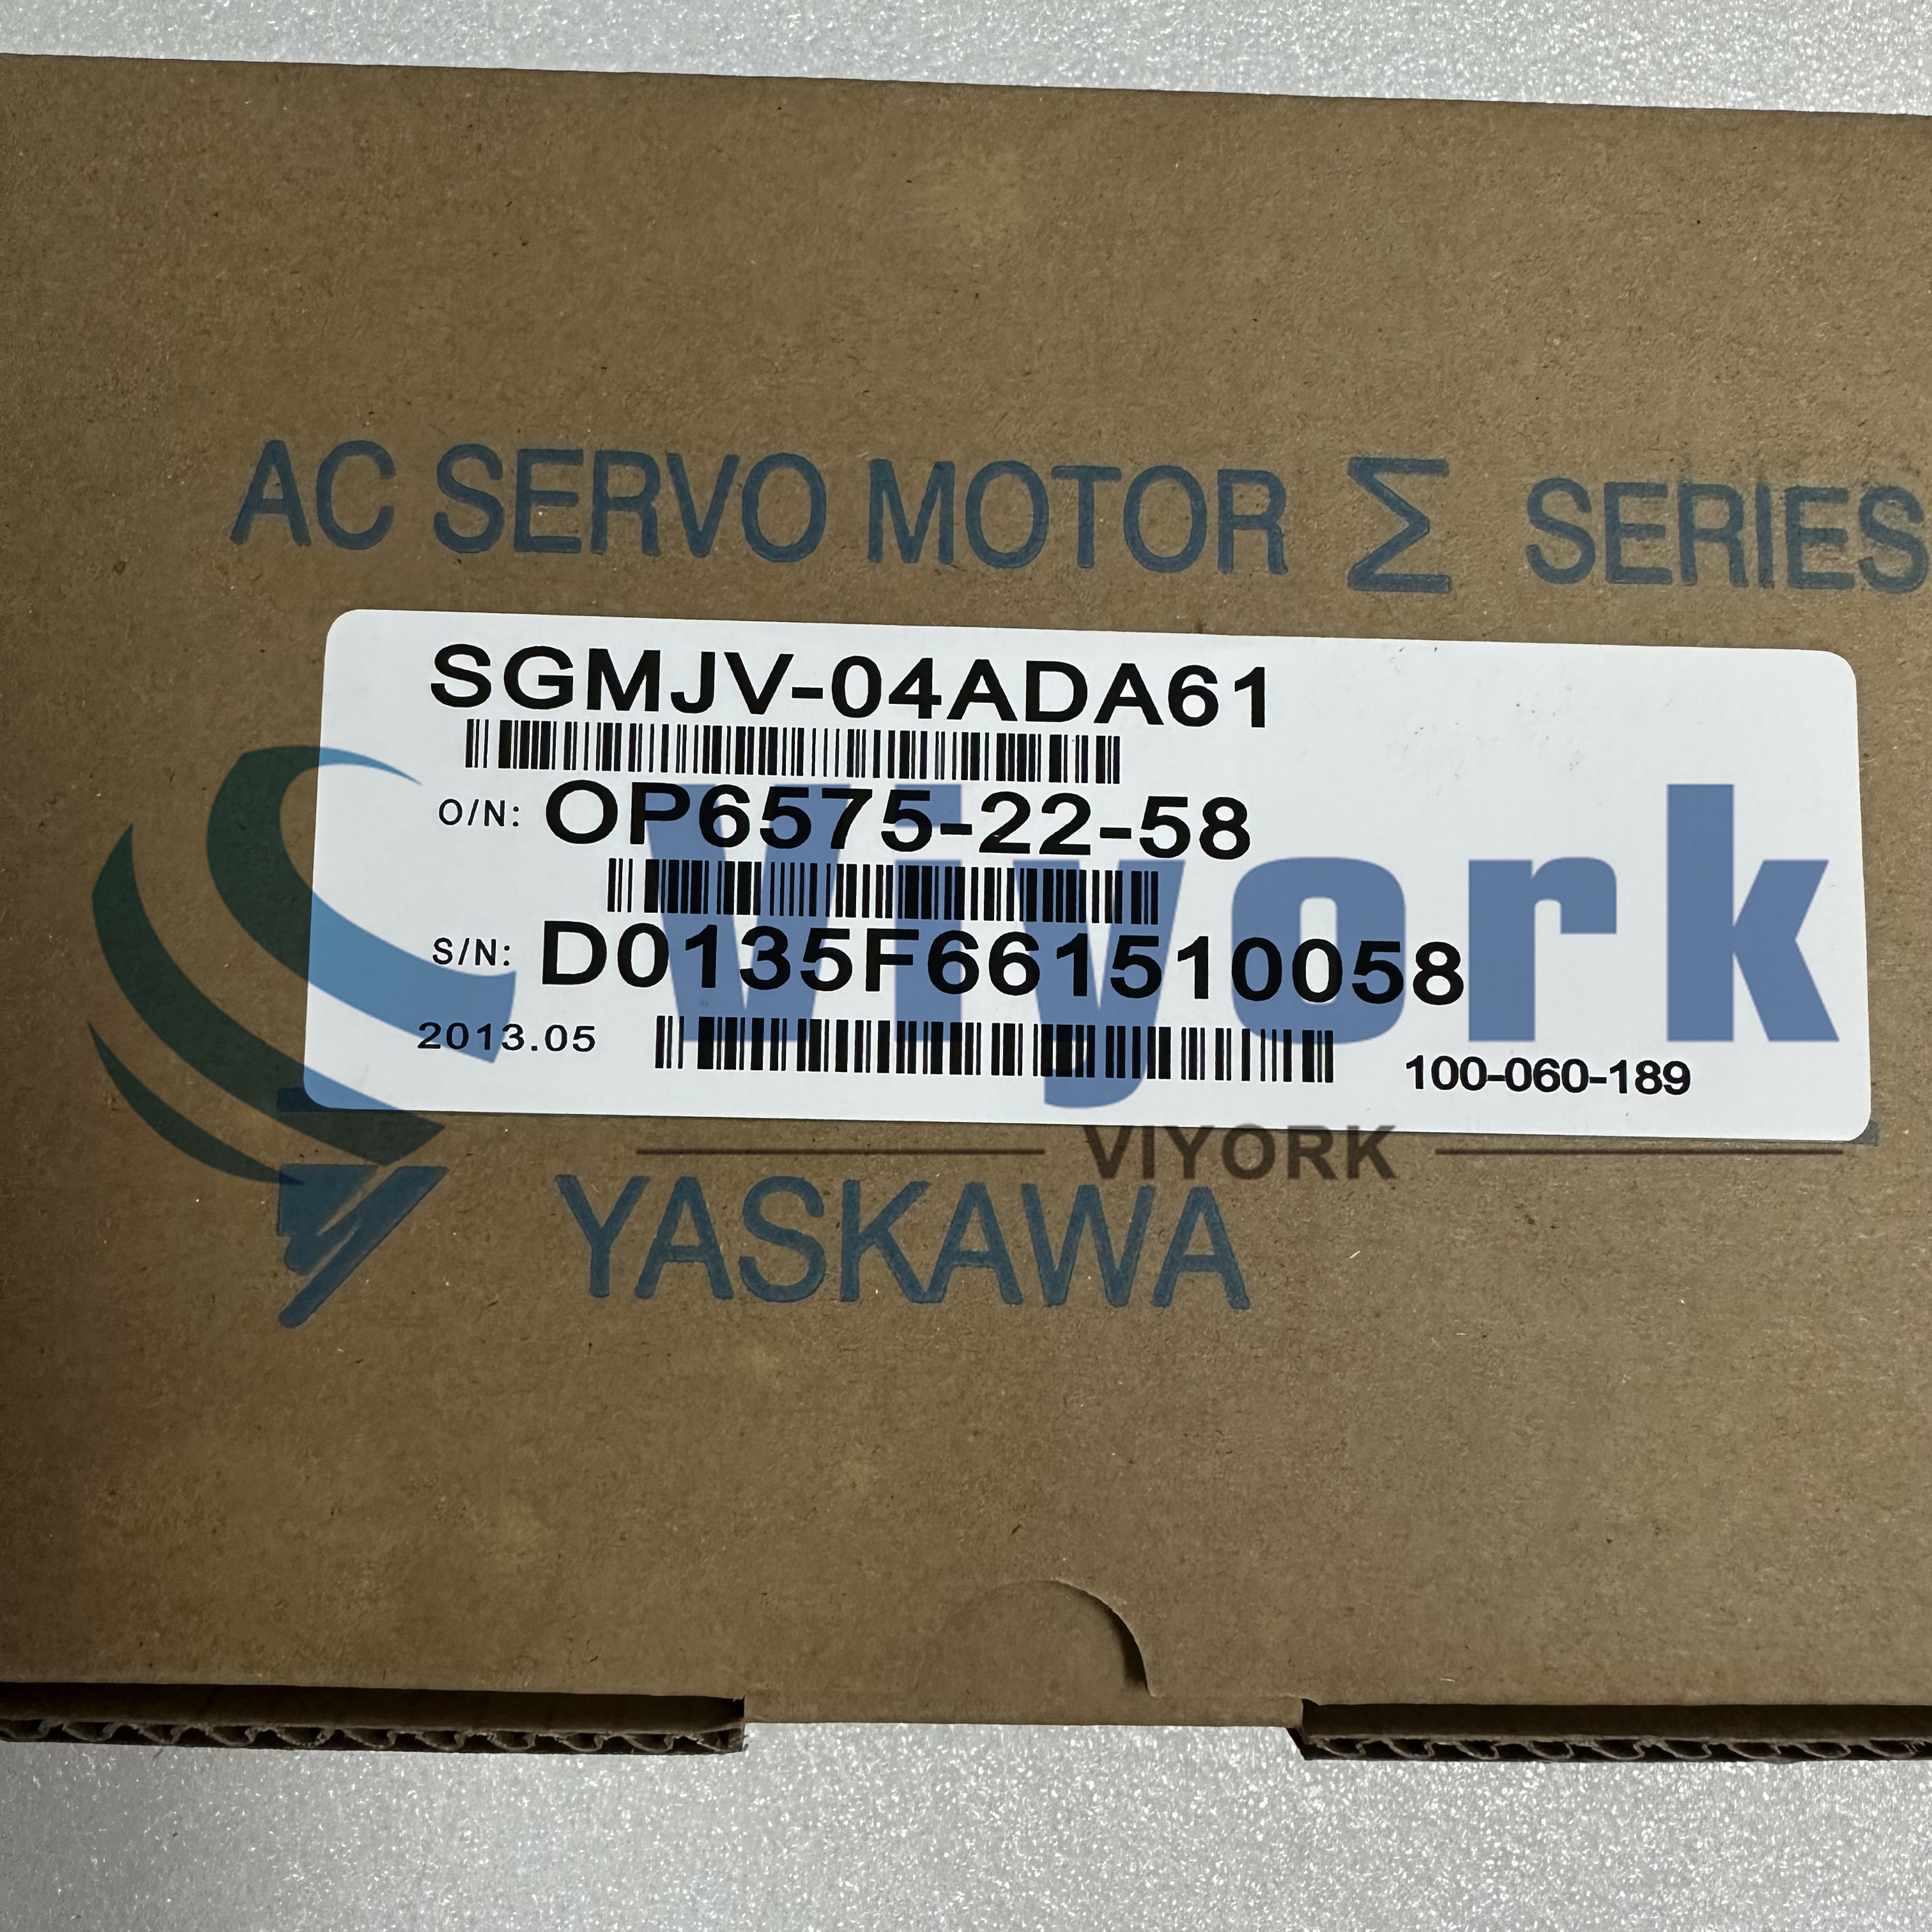 SGMJV-04ADA61 AC SERVO MOTOR NEW